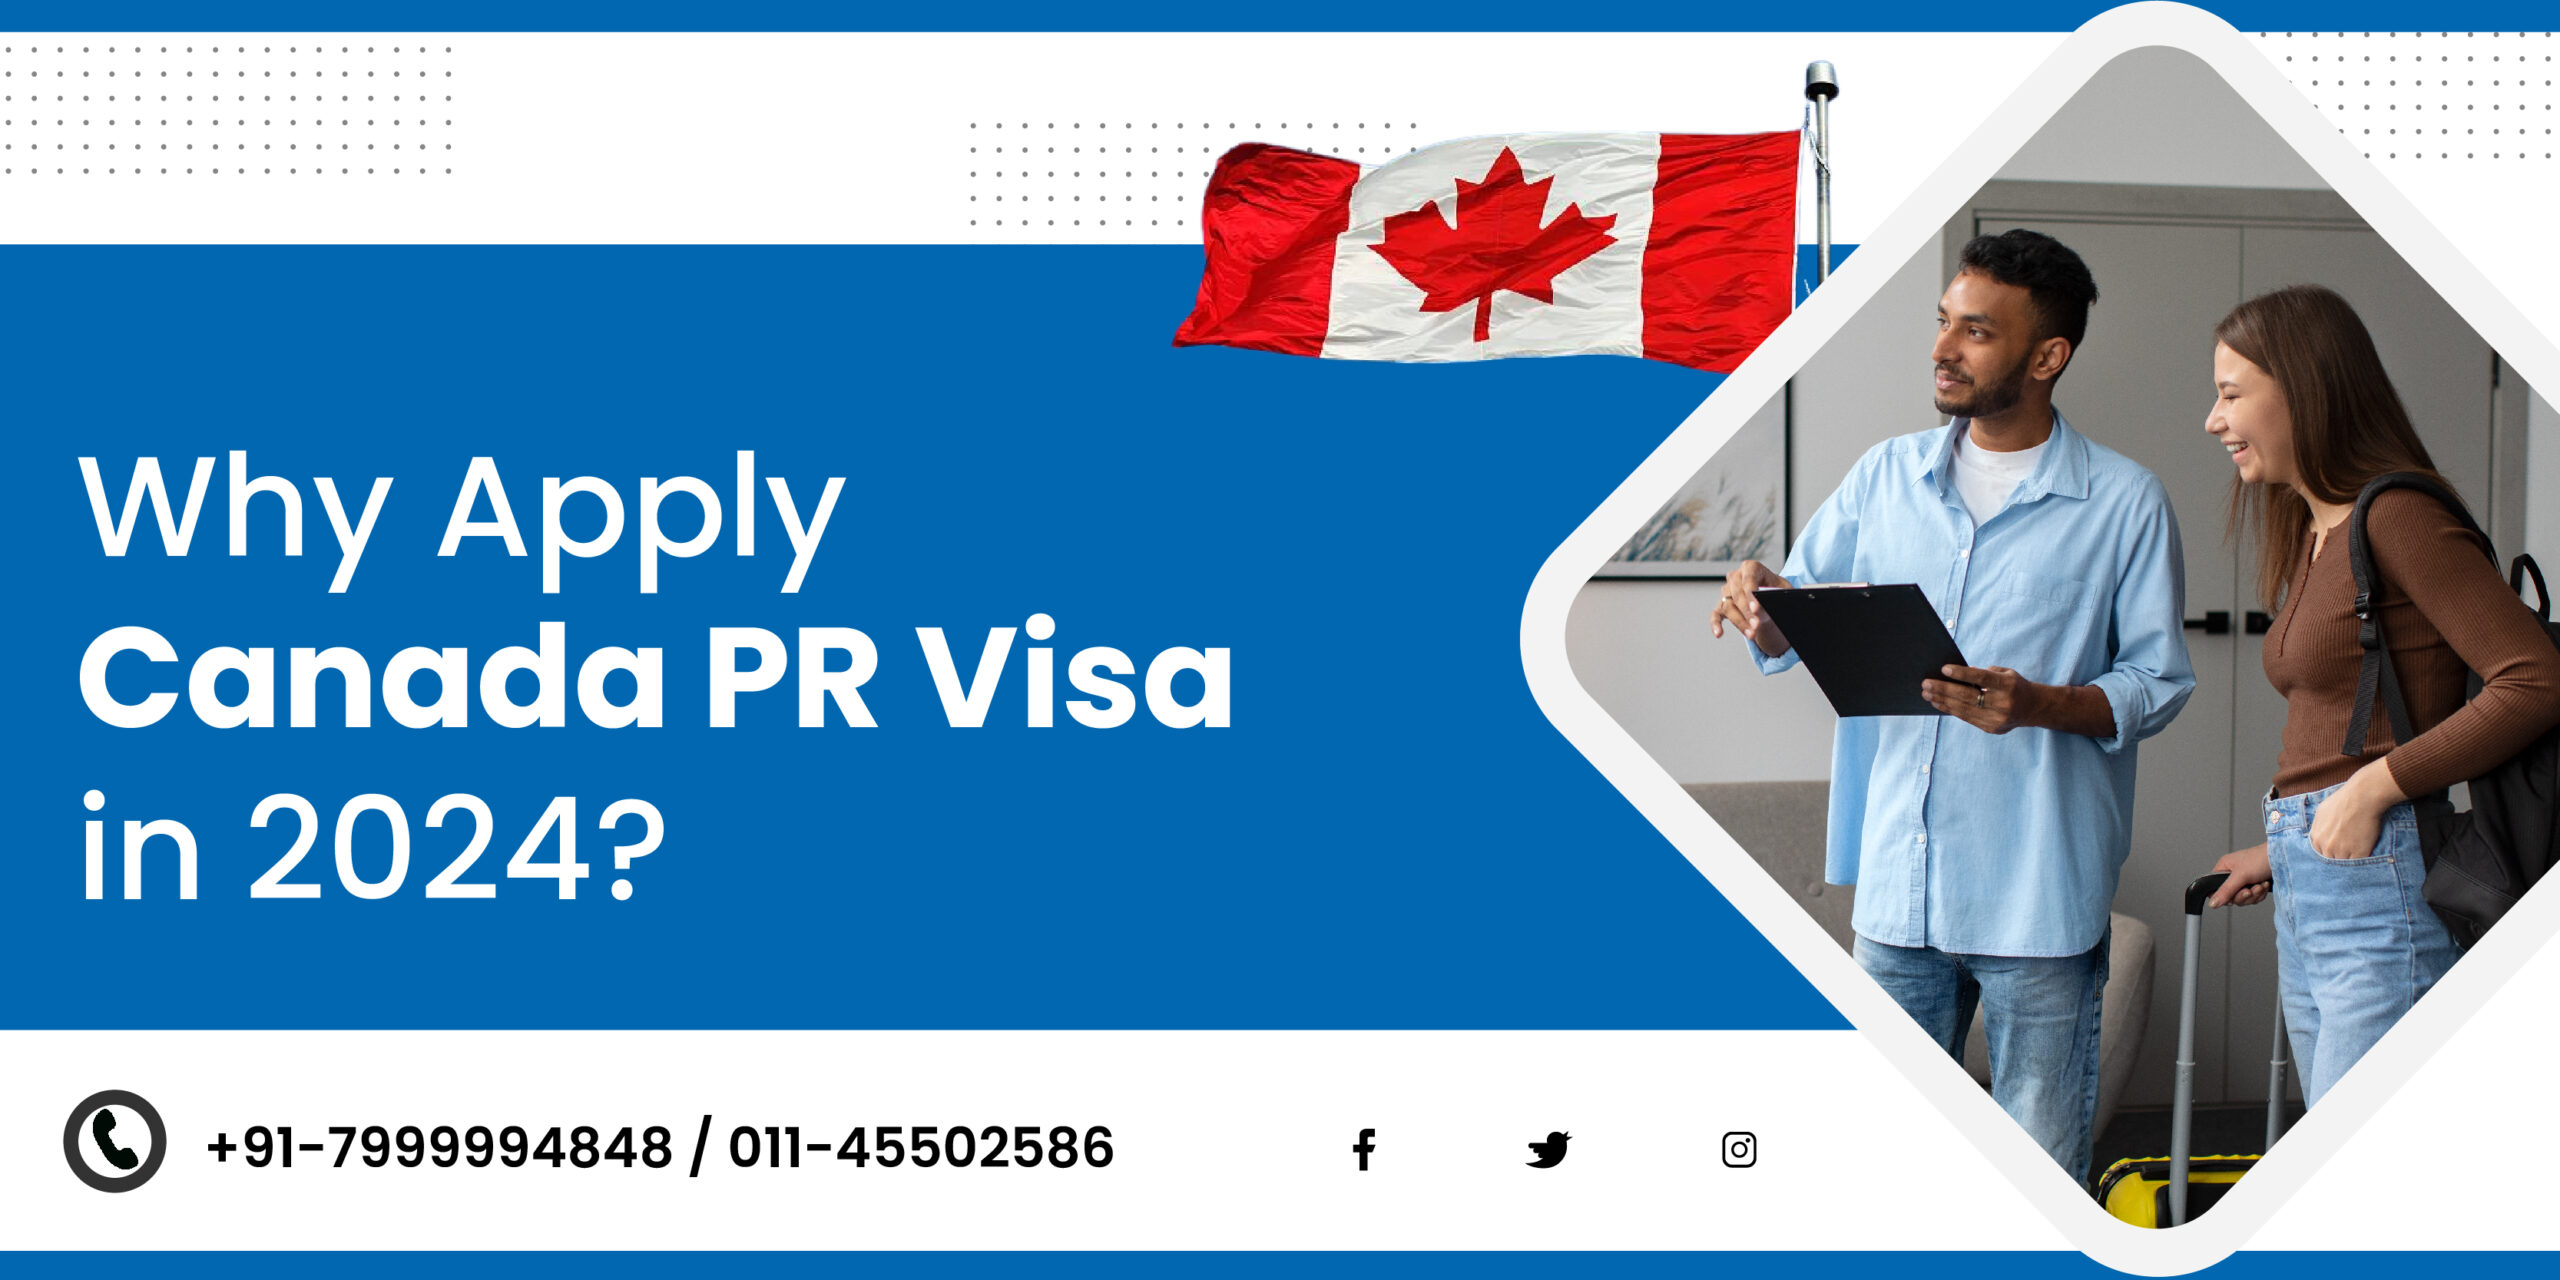 Why Apply Canada PR Visa in 2024